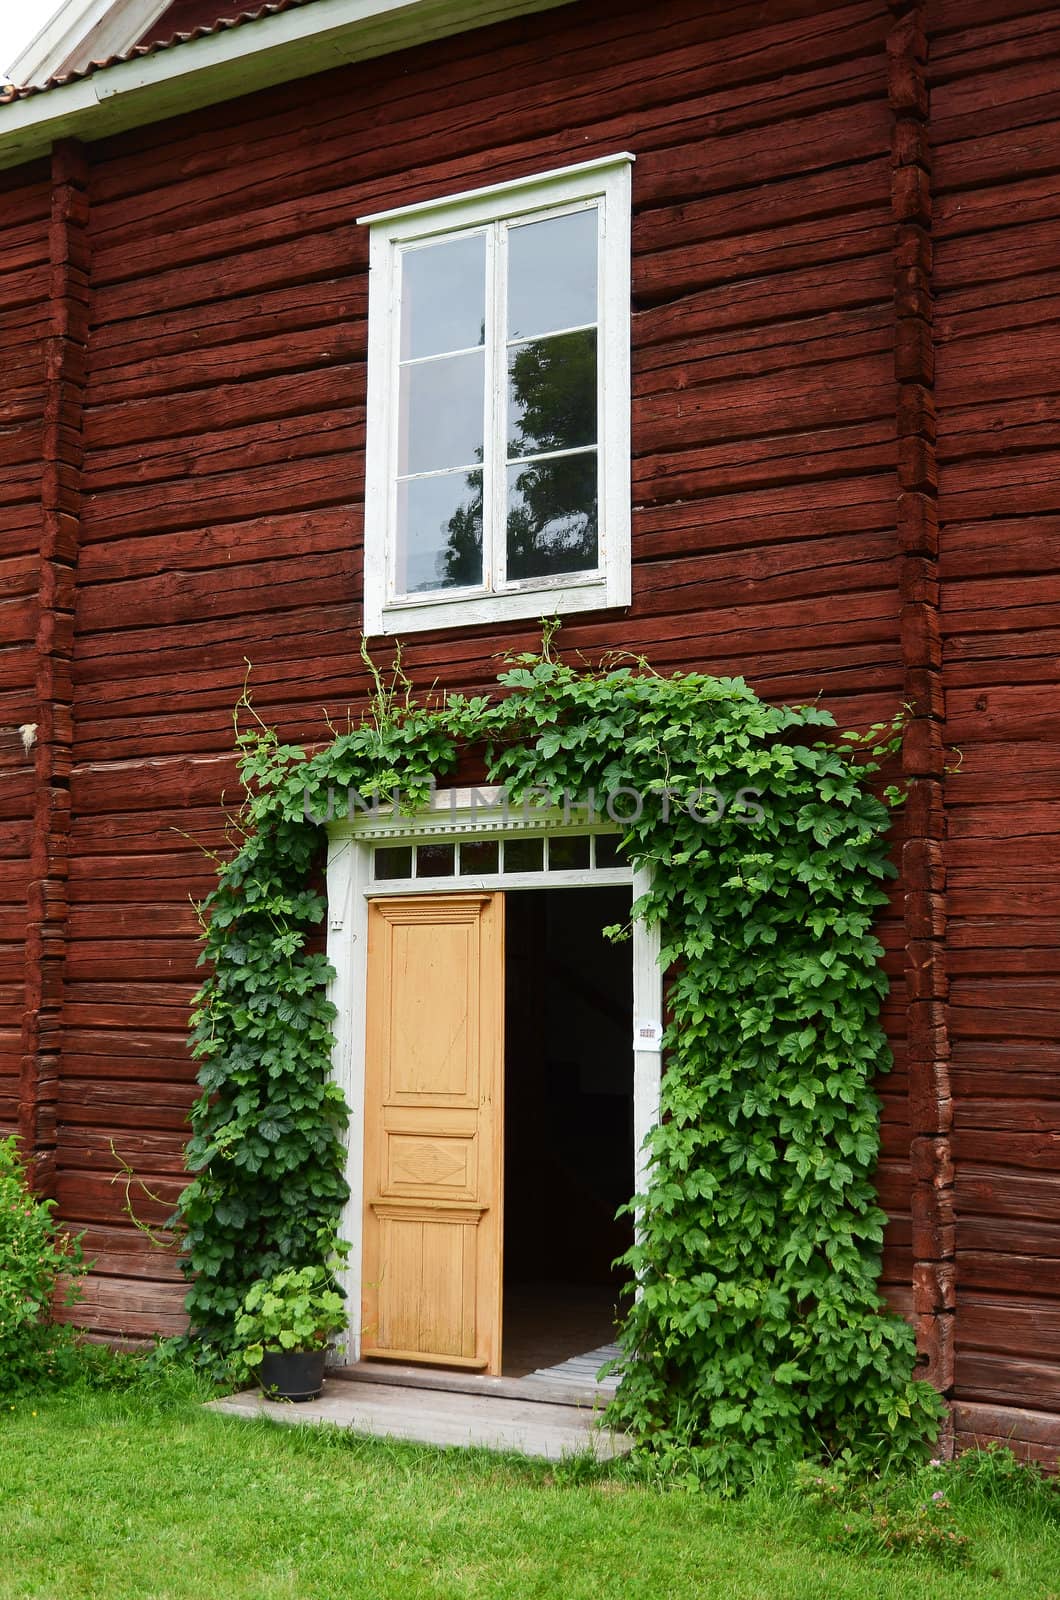 Entrance facade to a a hälsinge farm